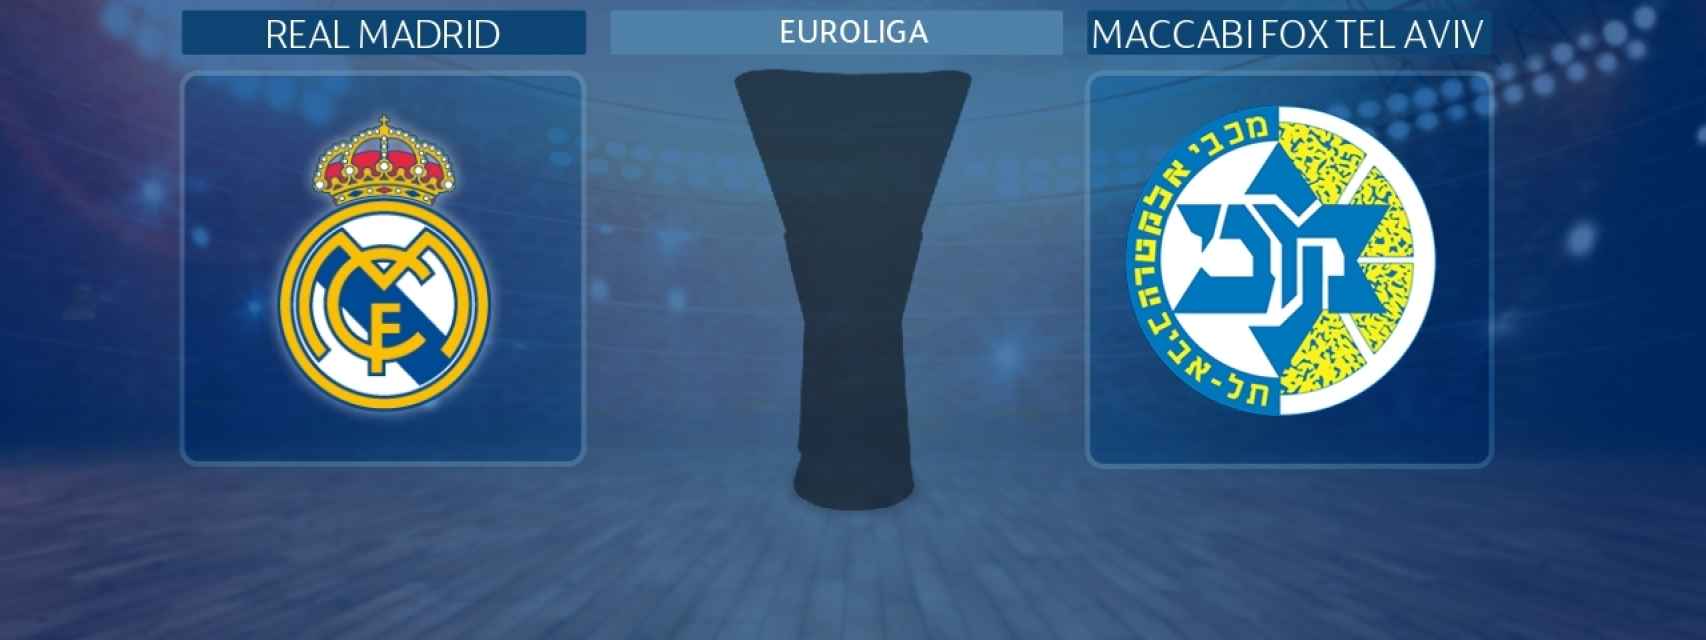 Real Madrid - Maccabi Fox Tel Aviv